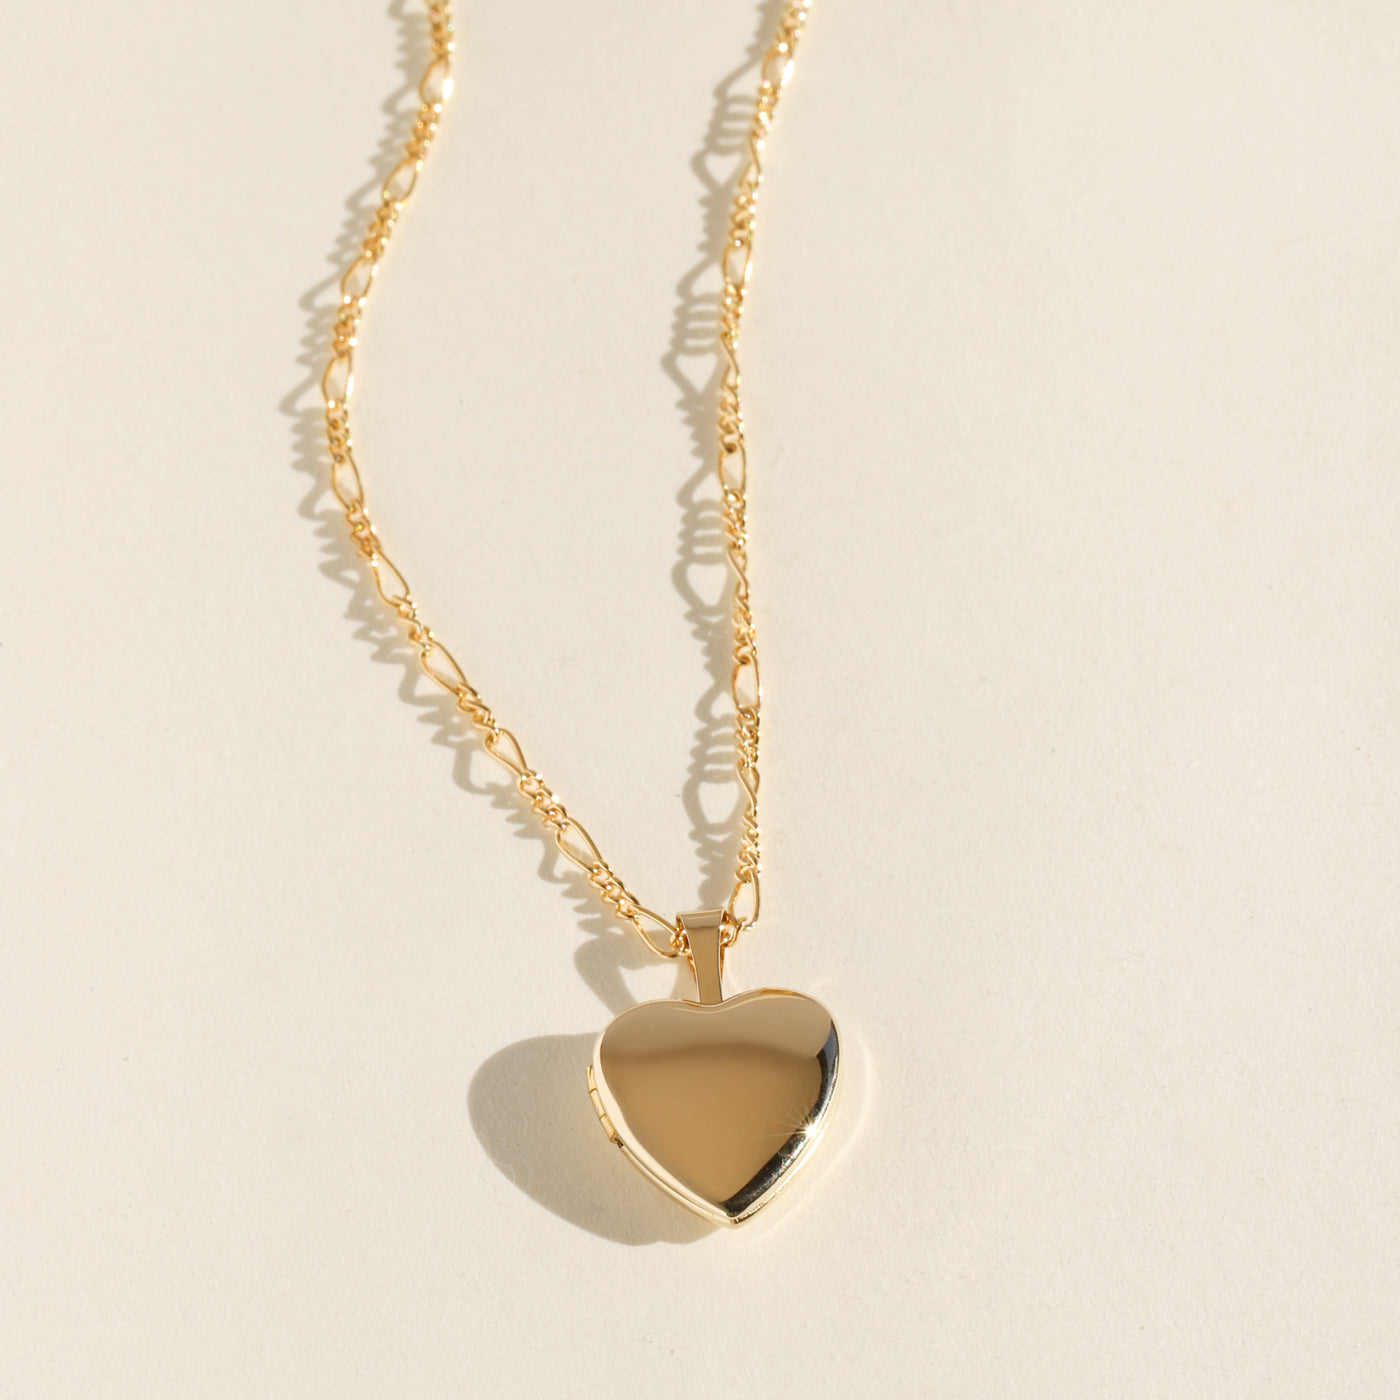 Heart locket pendant necklace